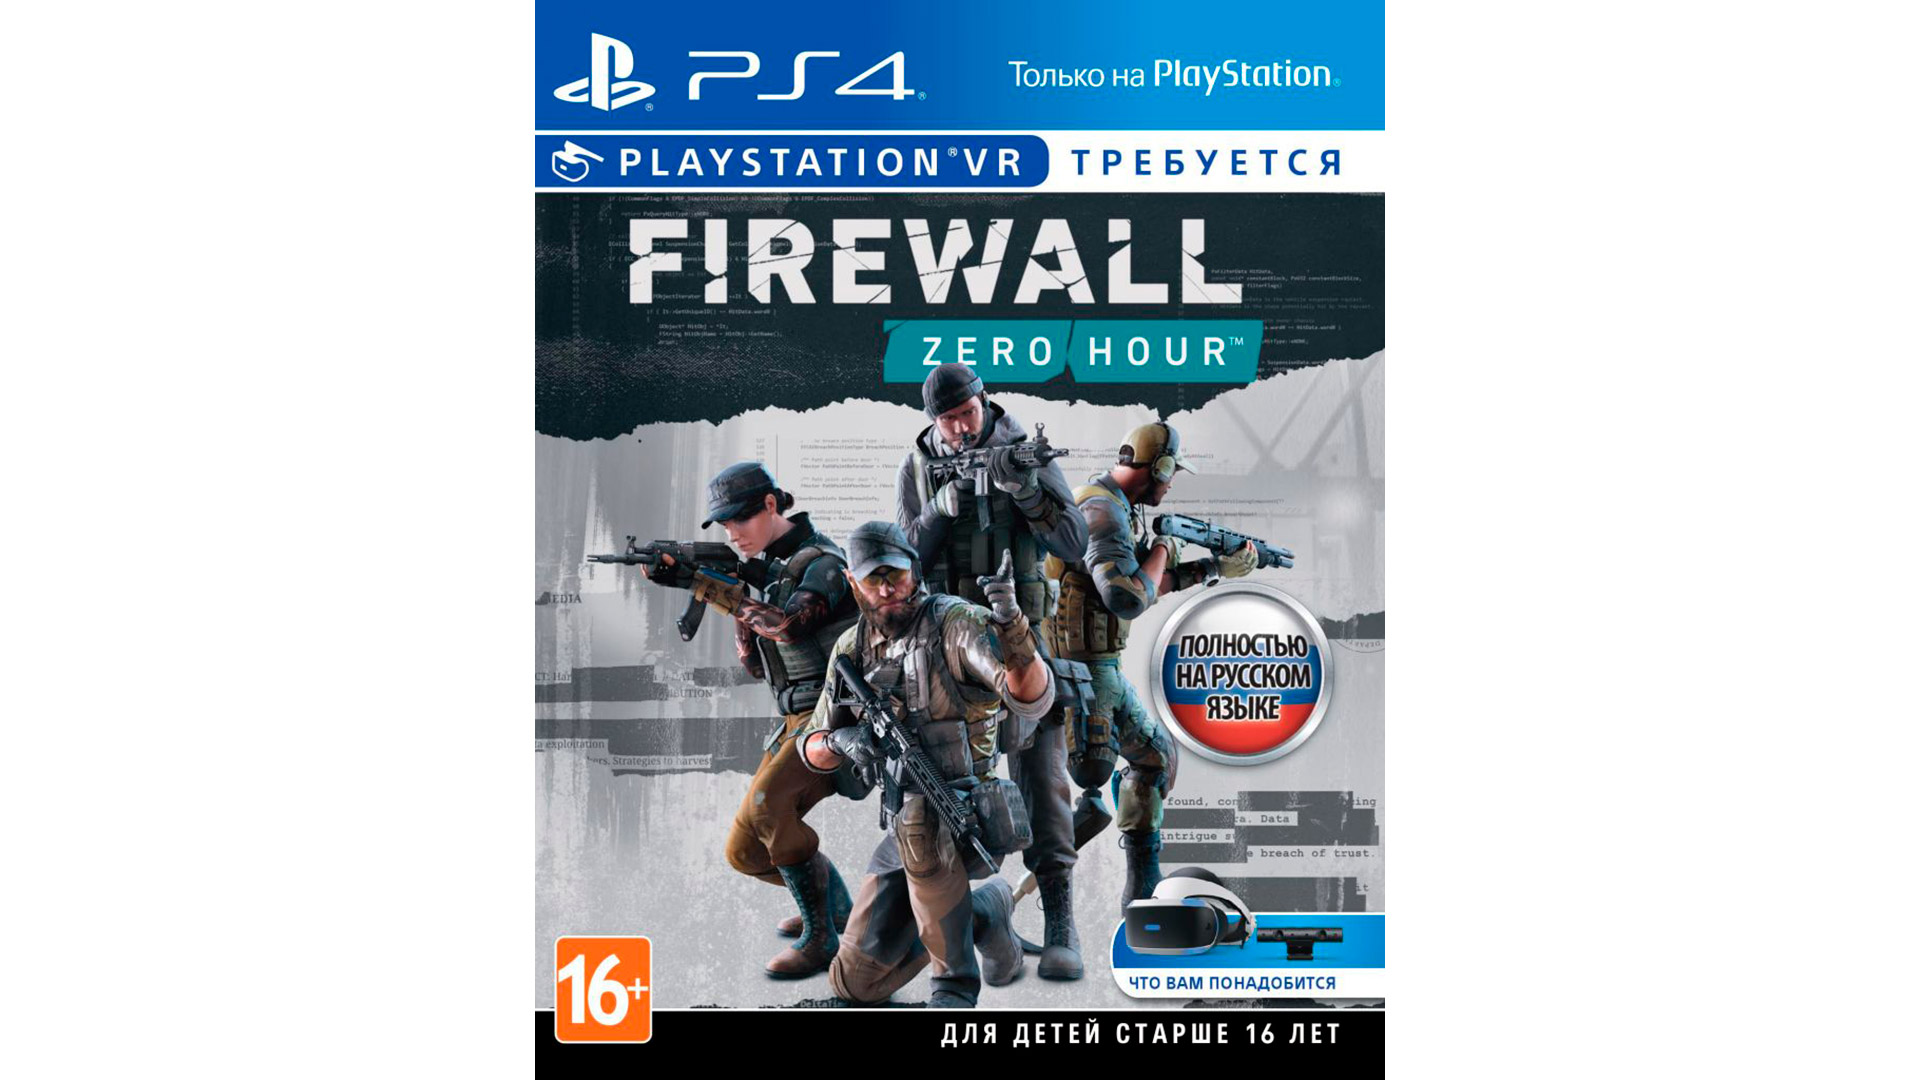 Firewall Zero Hour игра на PlayStation VR [FZHVR]